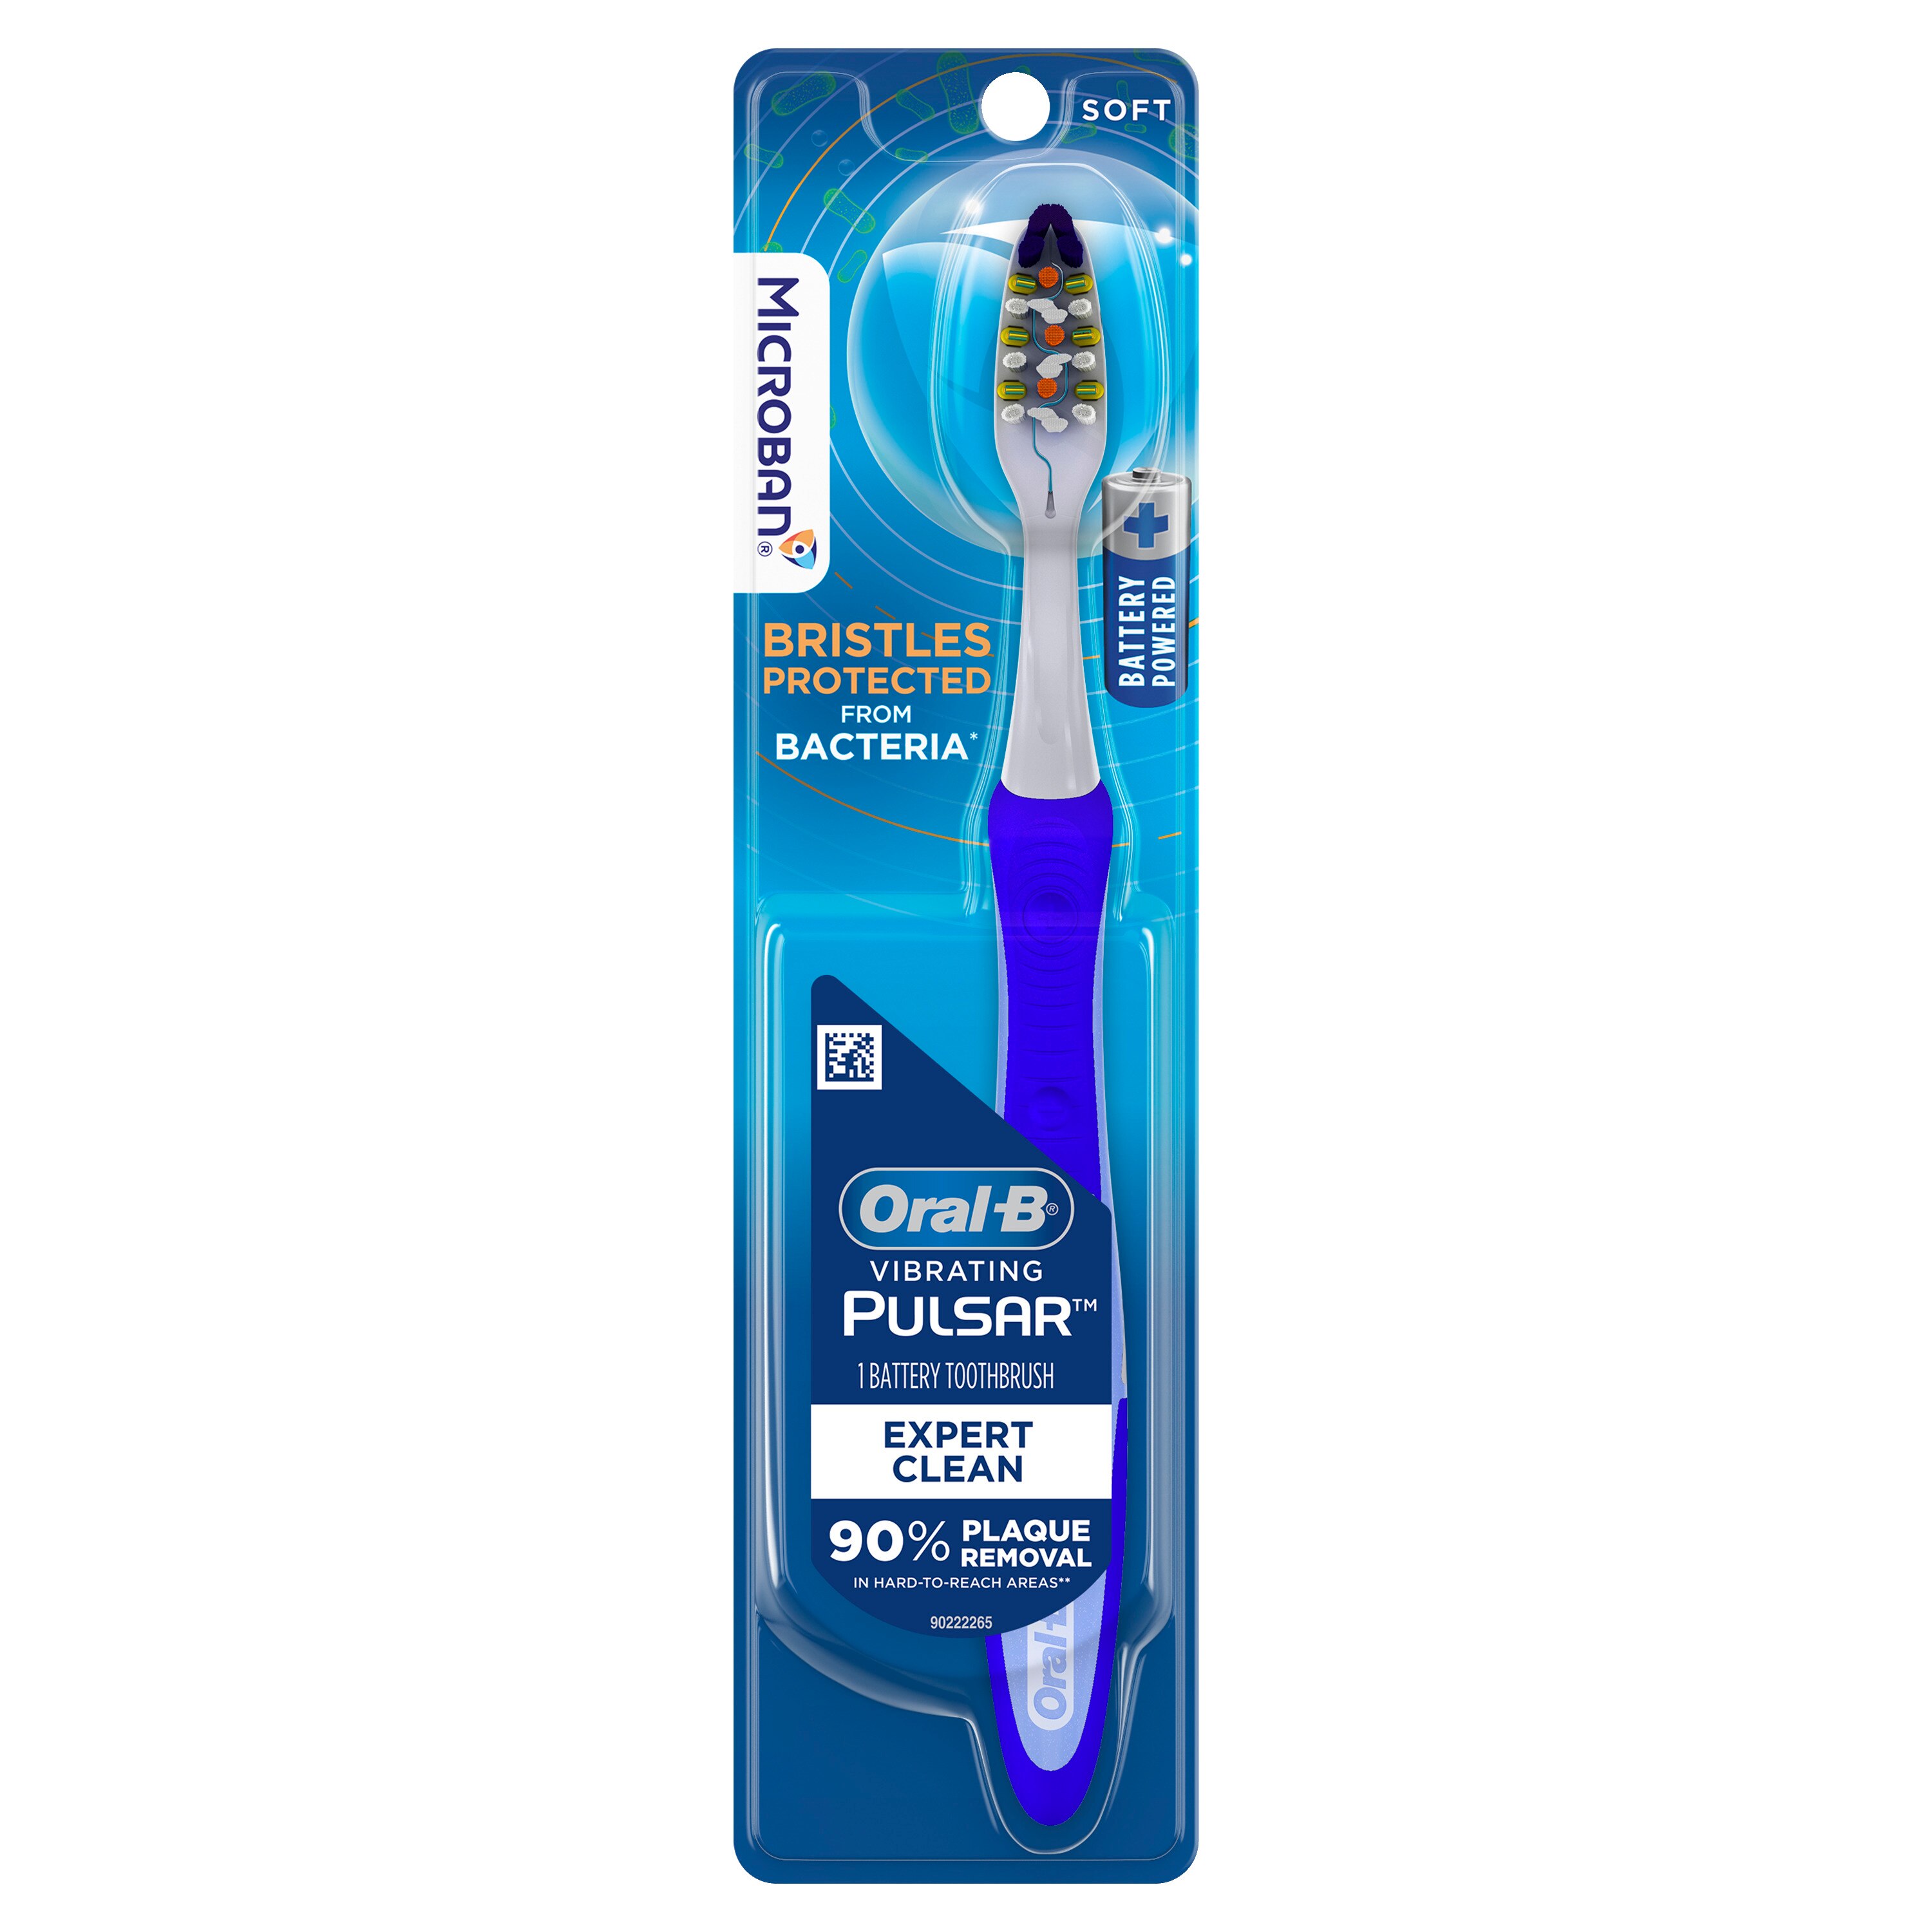 Oral-B Vibrating Pulsar Expert Clean Battery Toothbrush, Soft Bristle , CVS